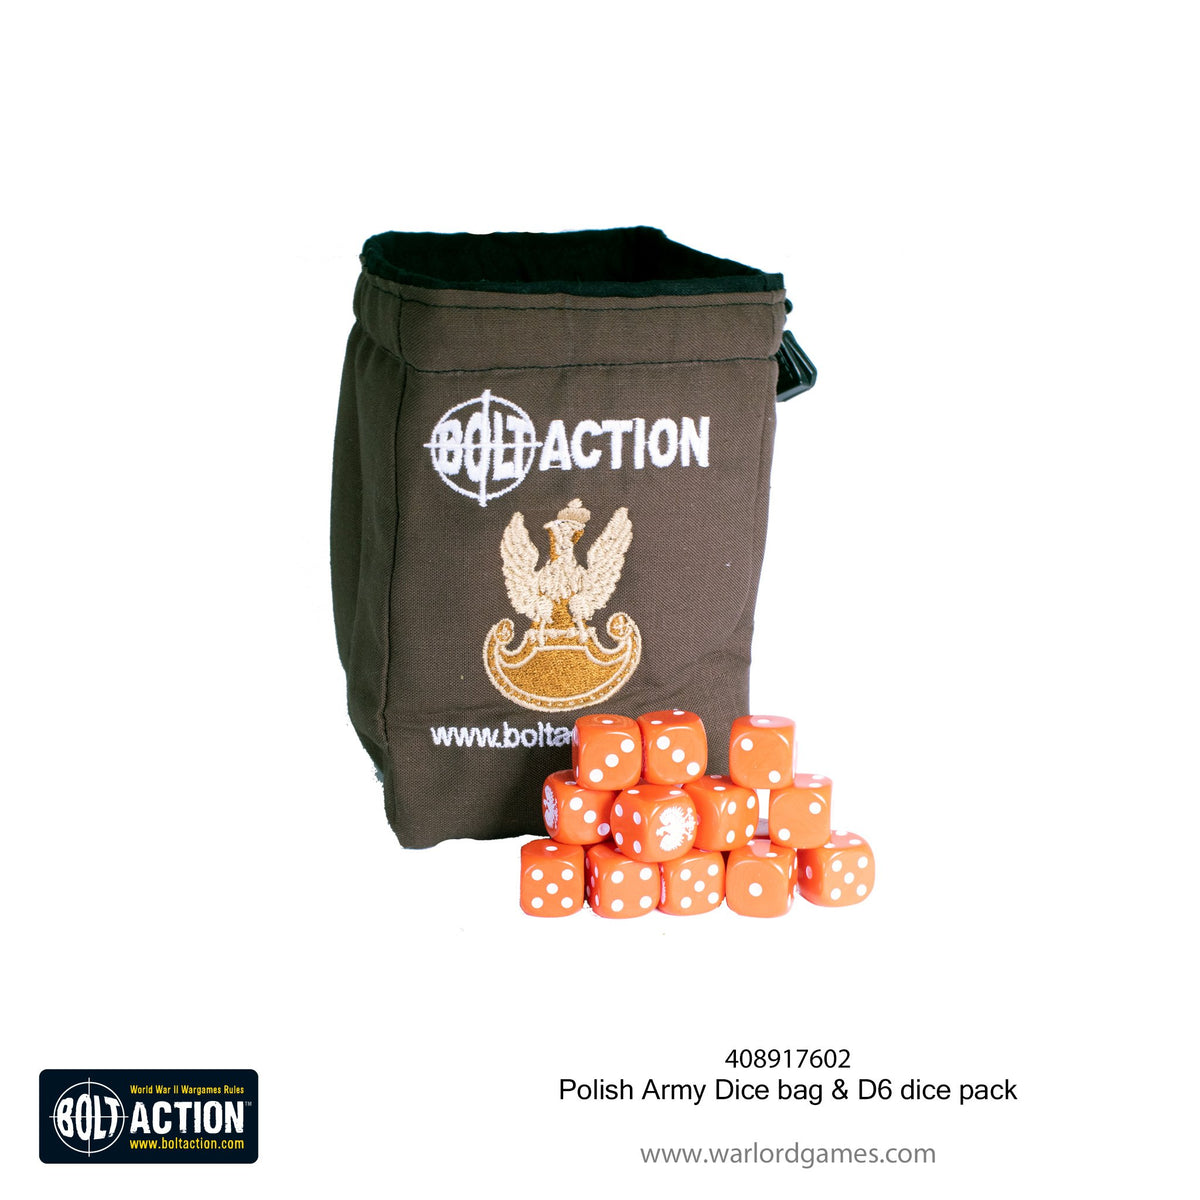 Polish Army Dice bag & D6 dice pack